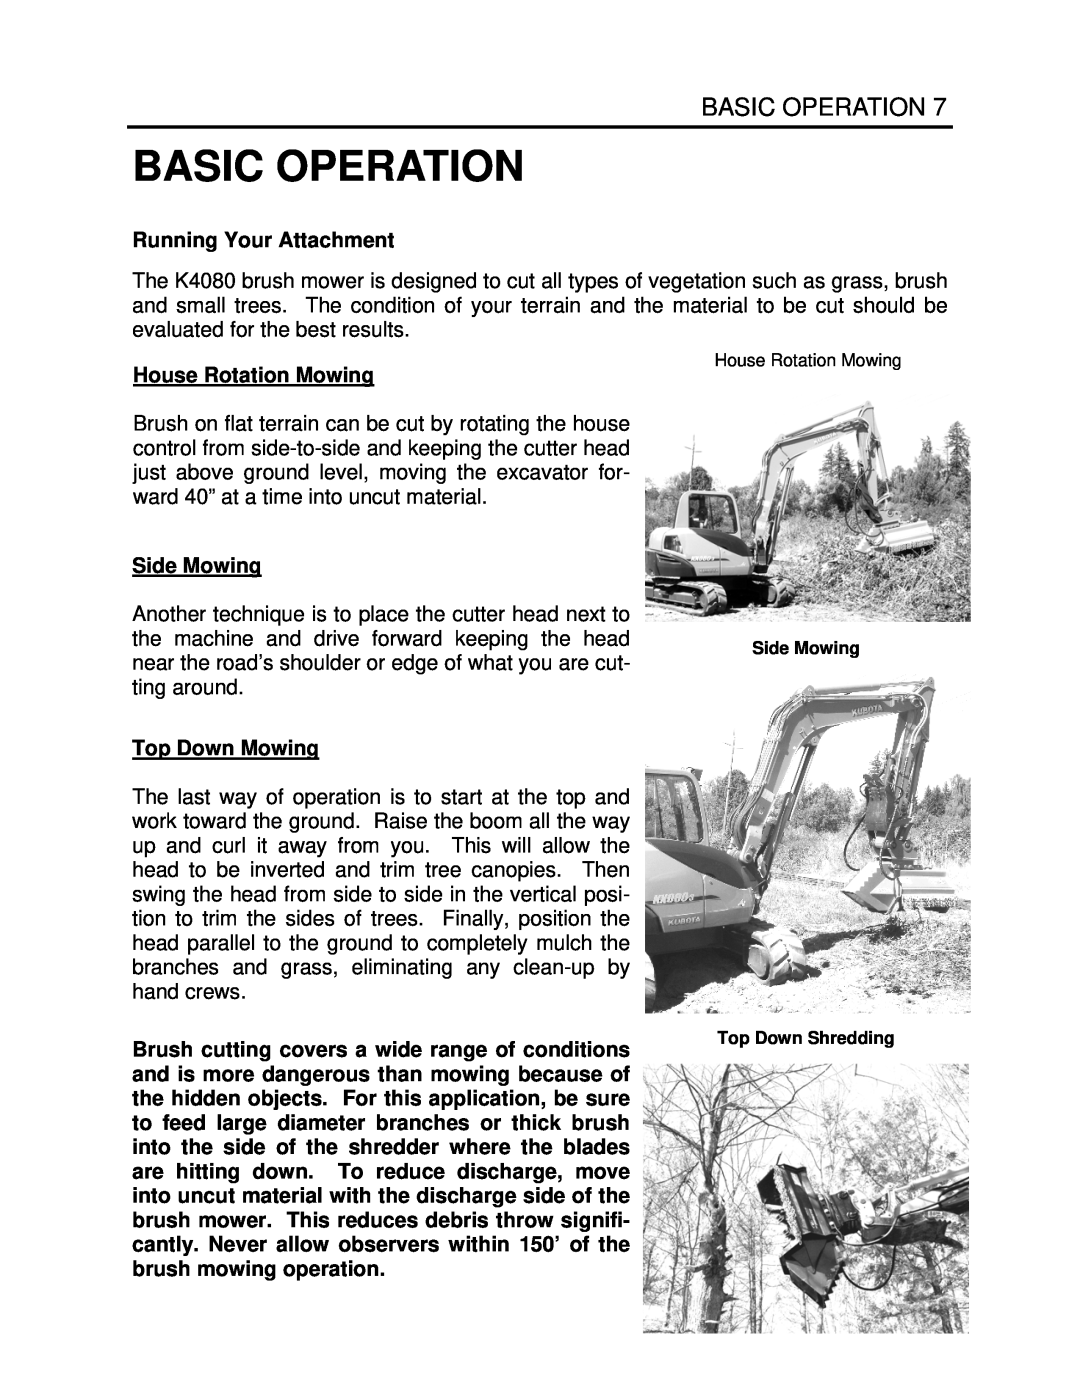 Generac Power Systems K4080 manual Basic Operation 